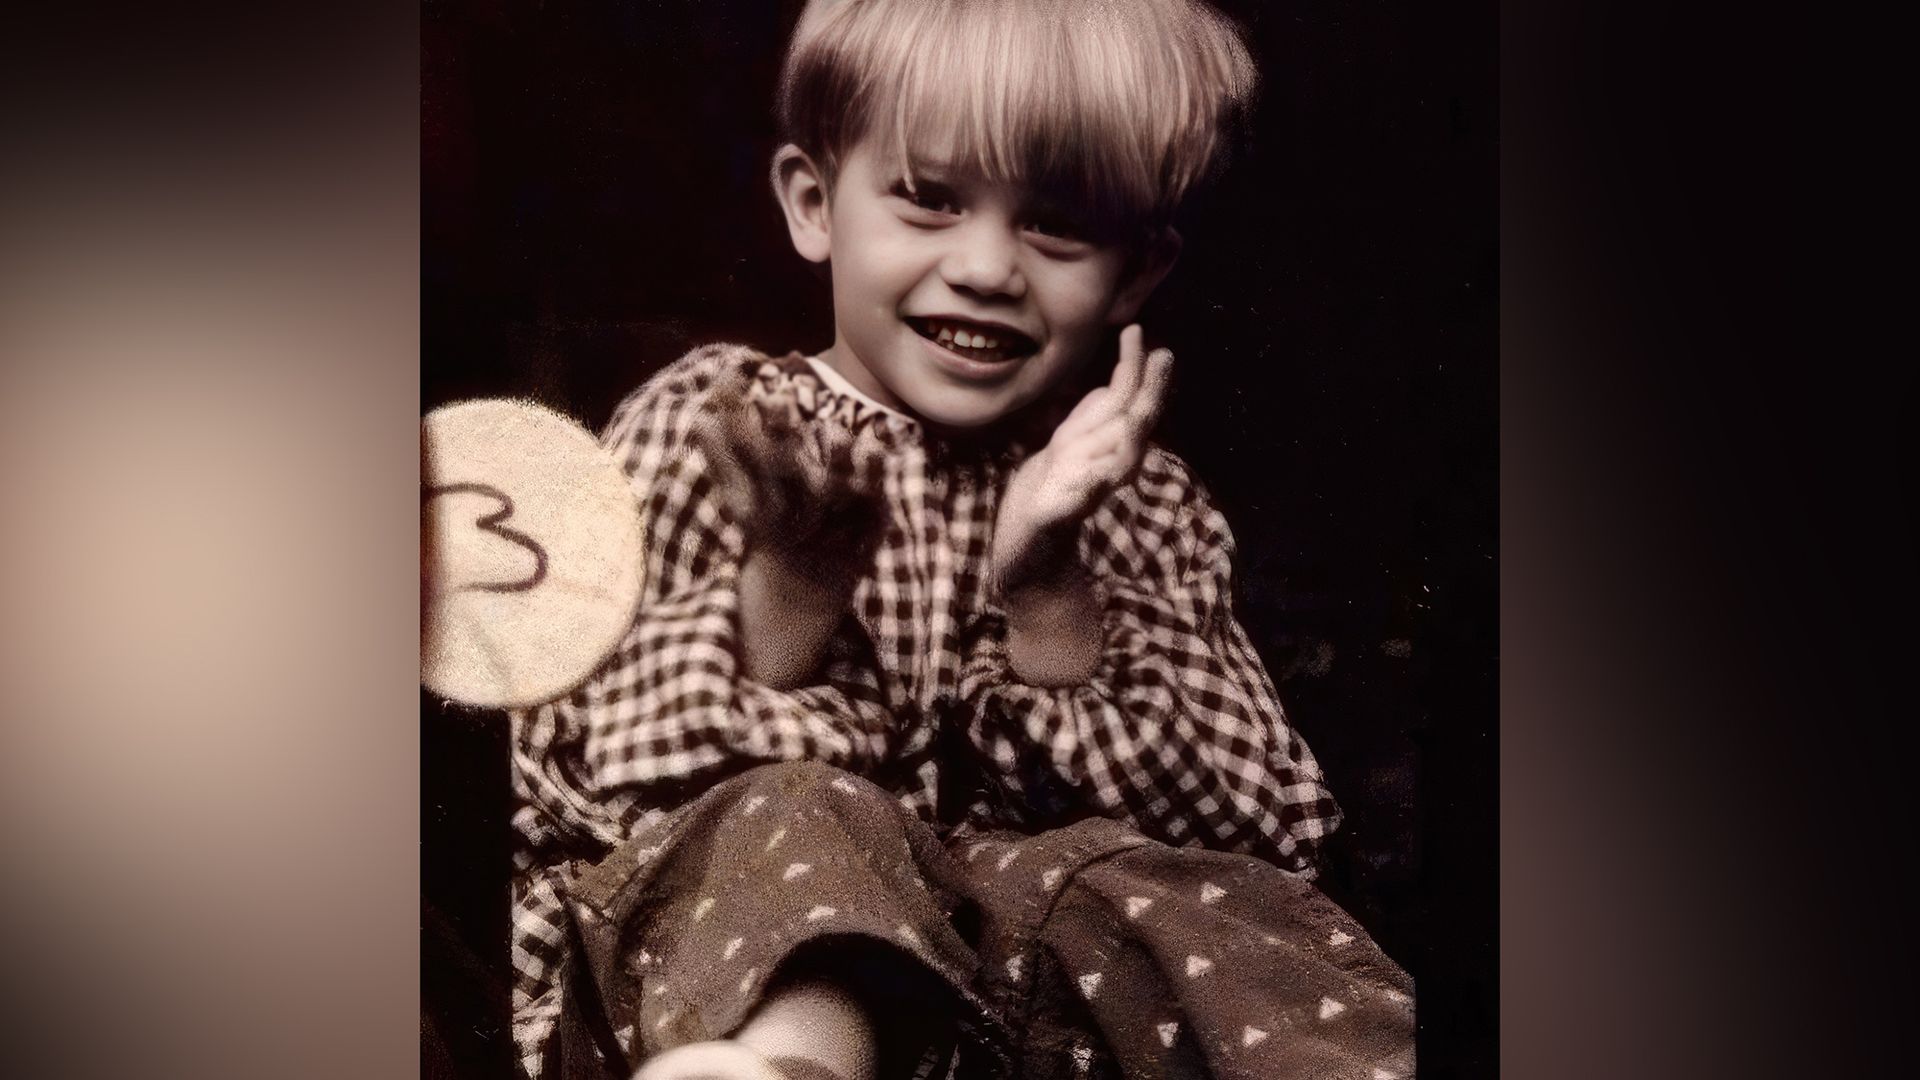  Nicholas Galitzine as a child